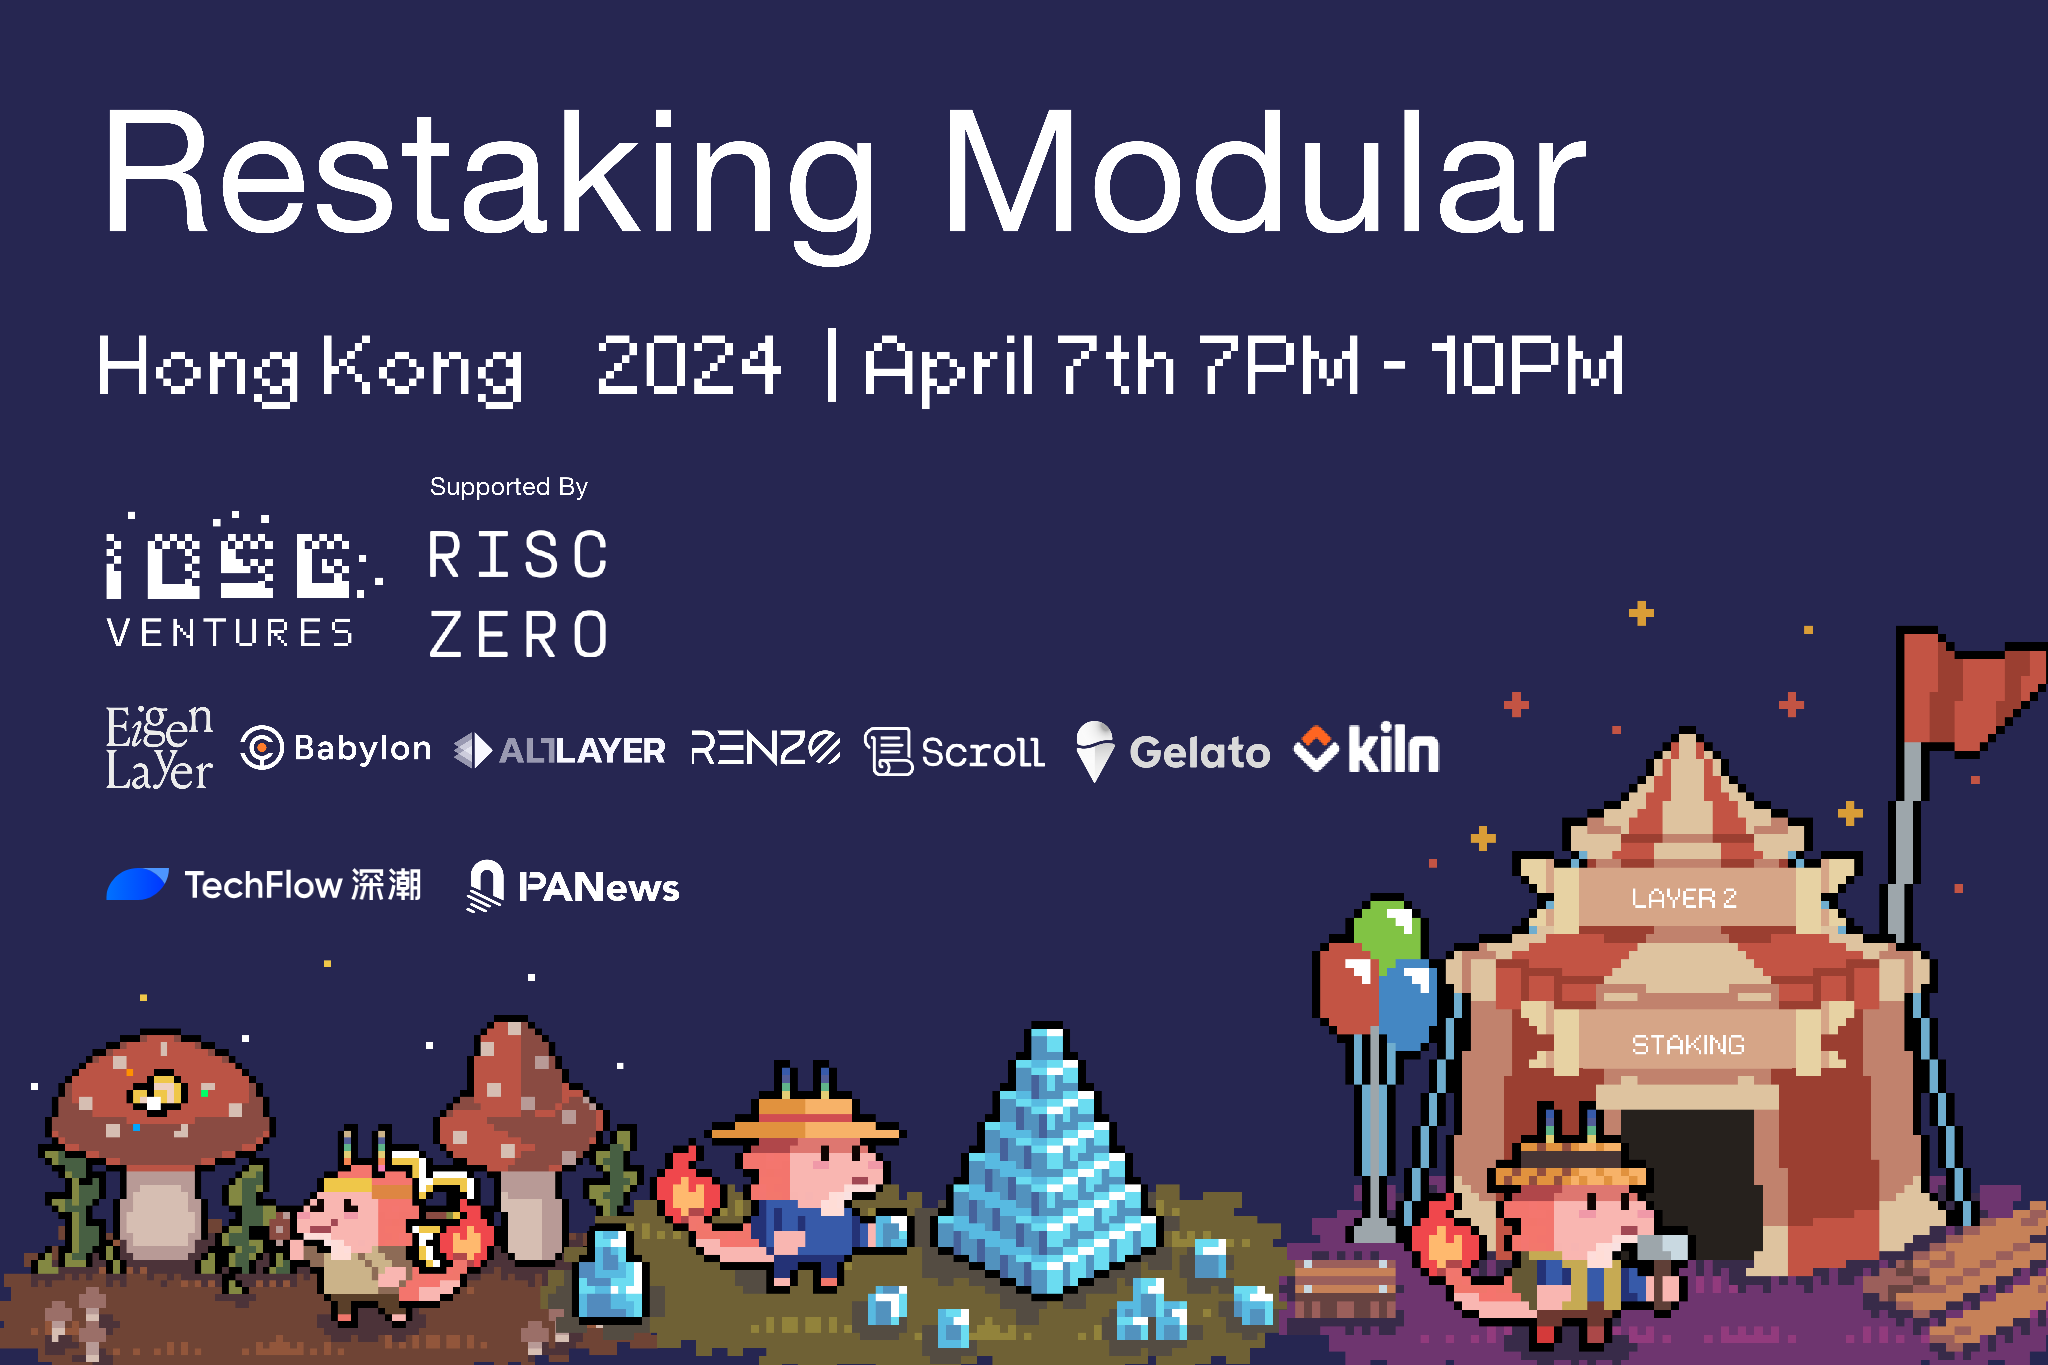 IOSG Ventures 香港周｜ Restaking Modular Apr.7th 活动报名加速进行时